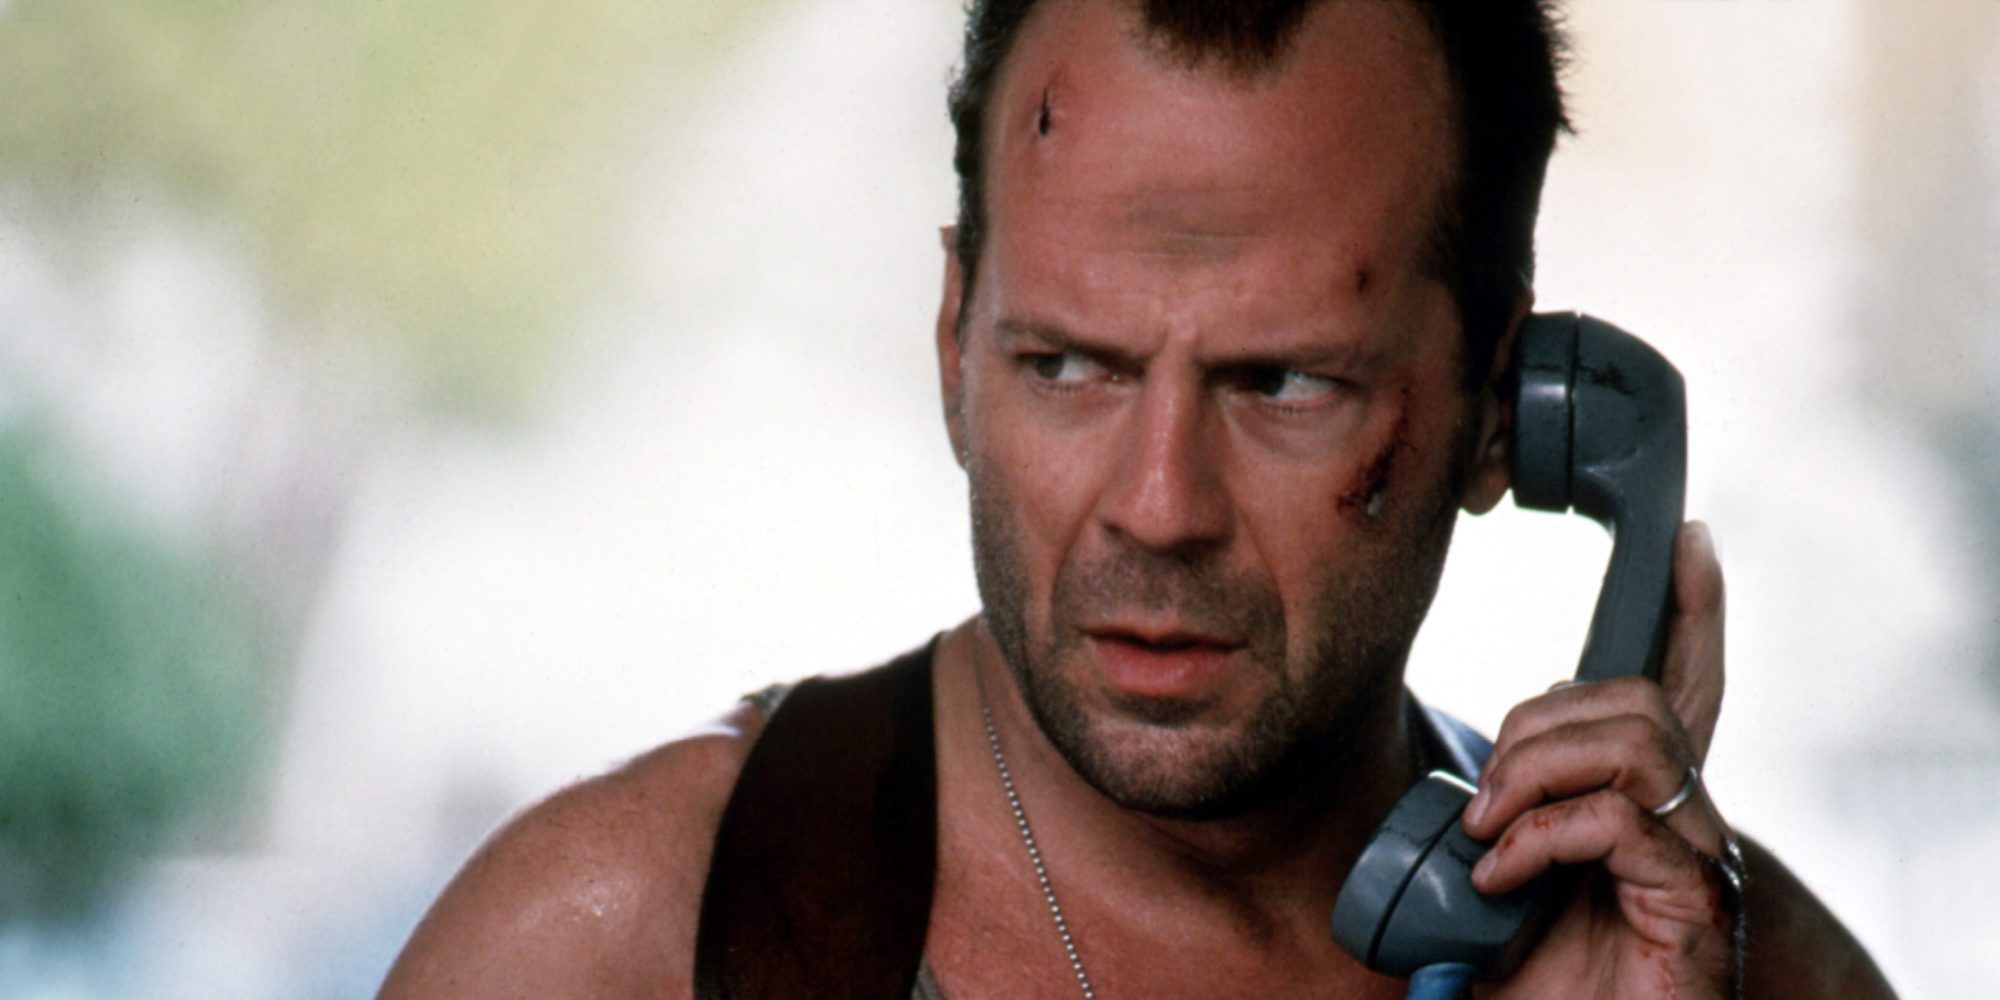 John McClane de Die Hard fala ao telefone